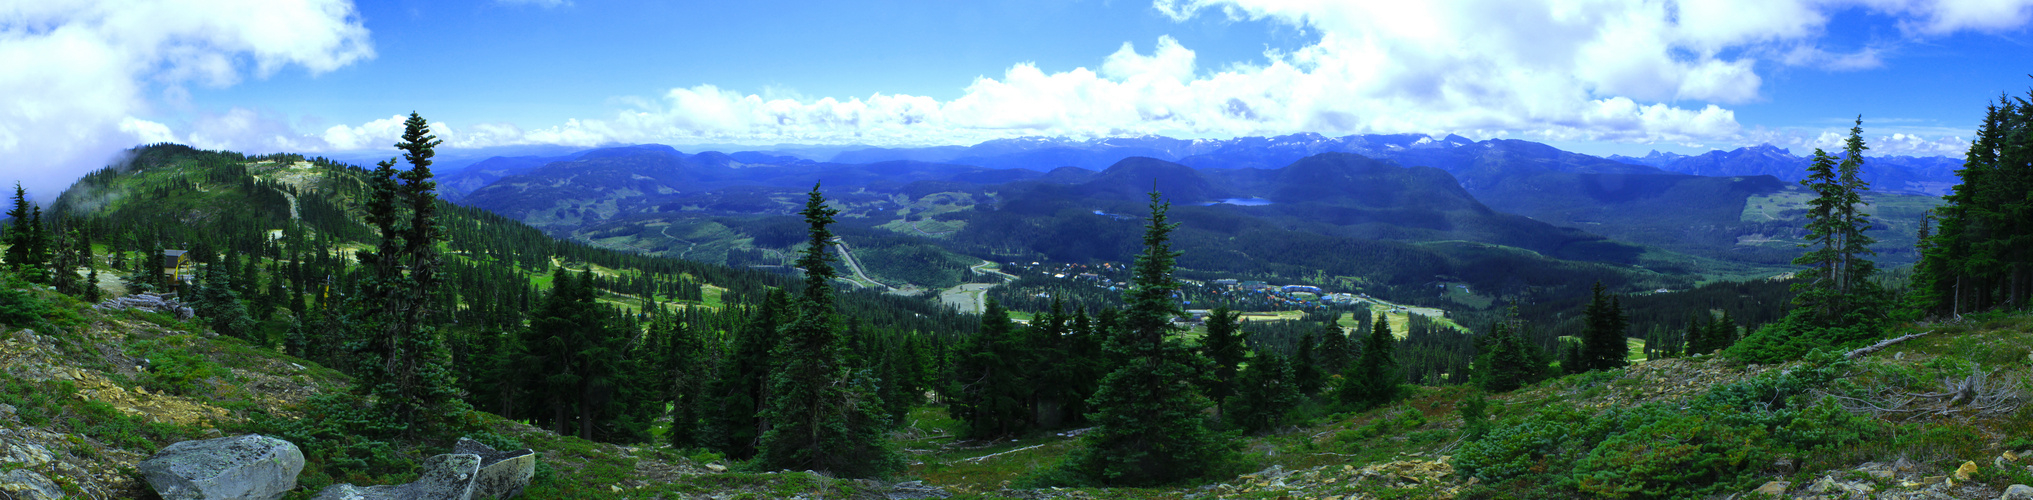 Mount Washington, Vancouver Island, B.C., Canada